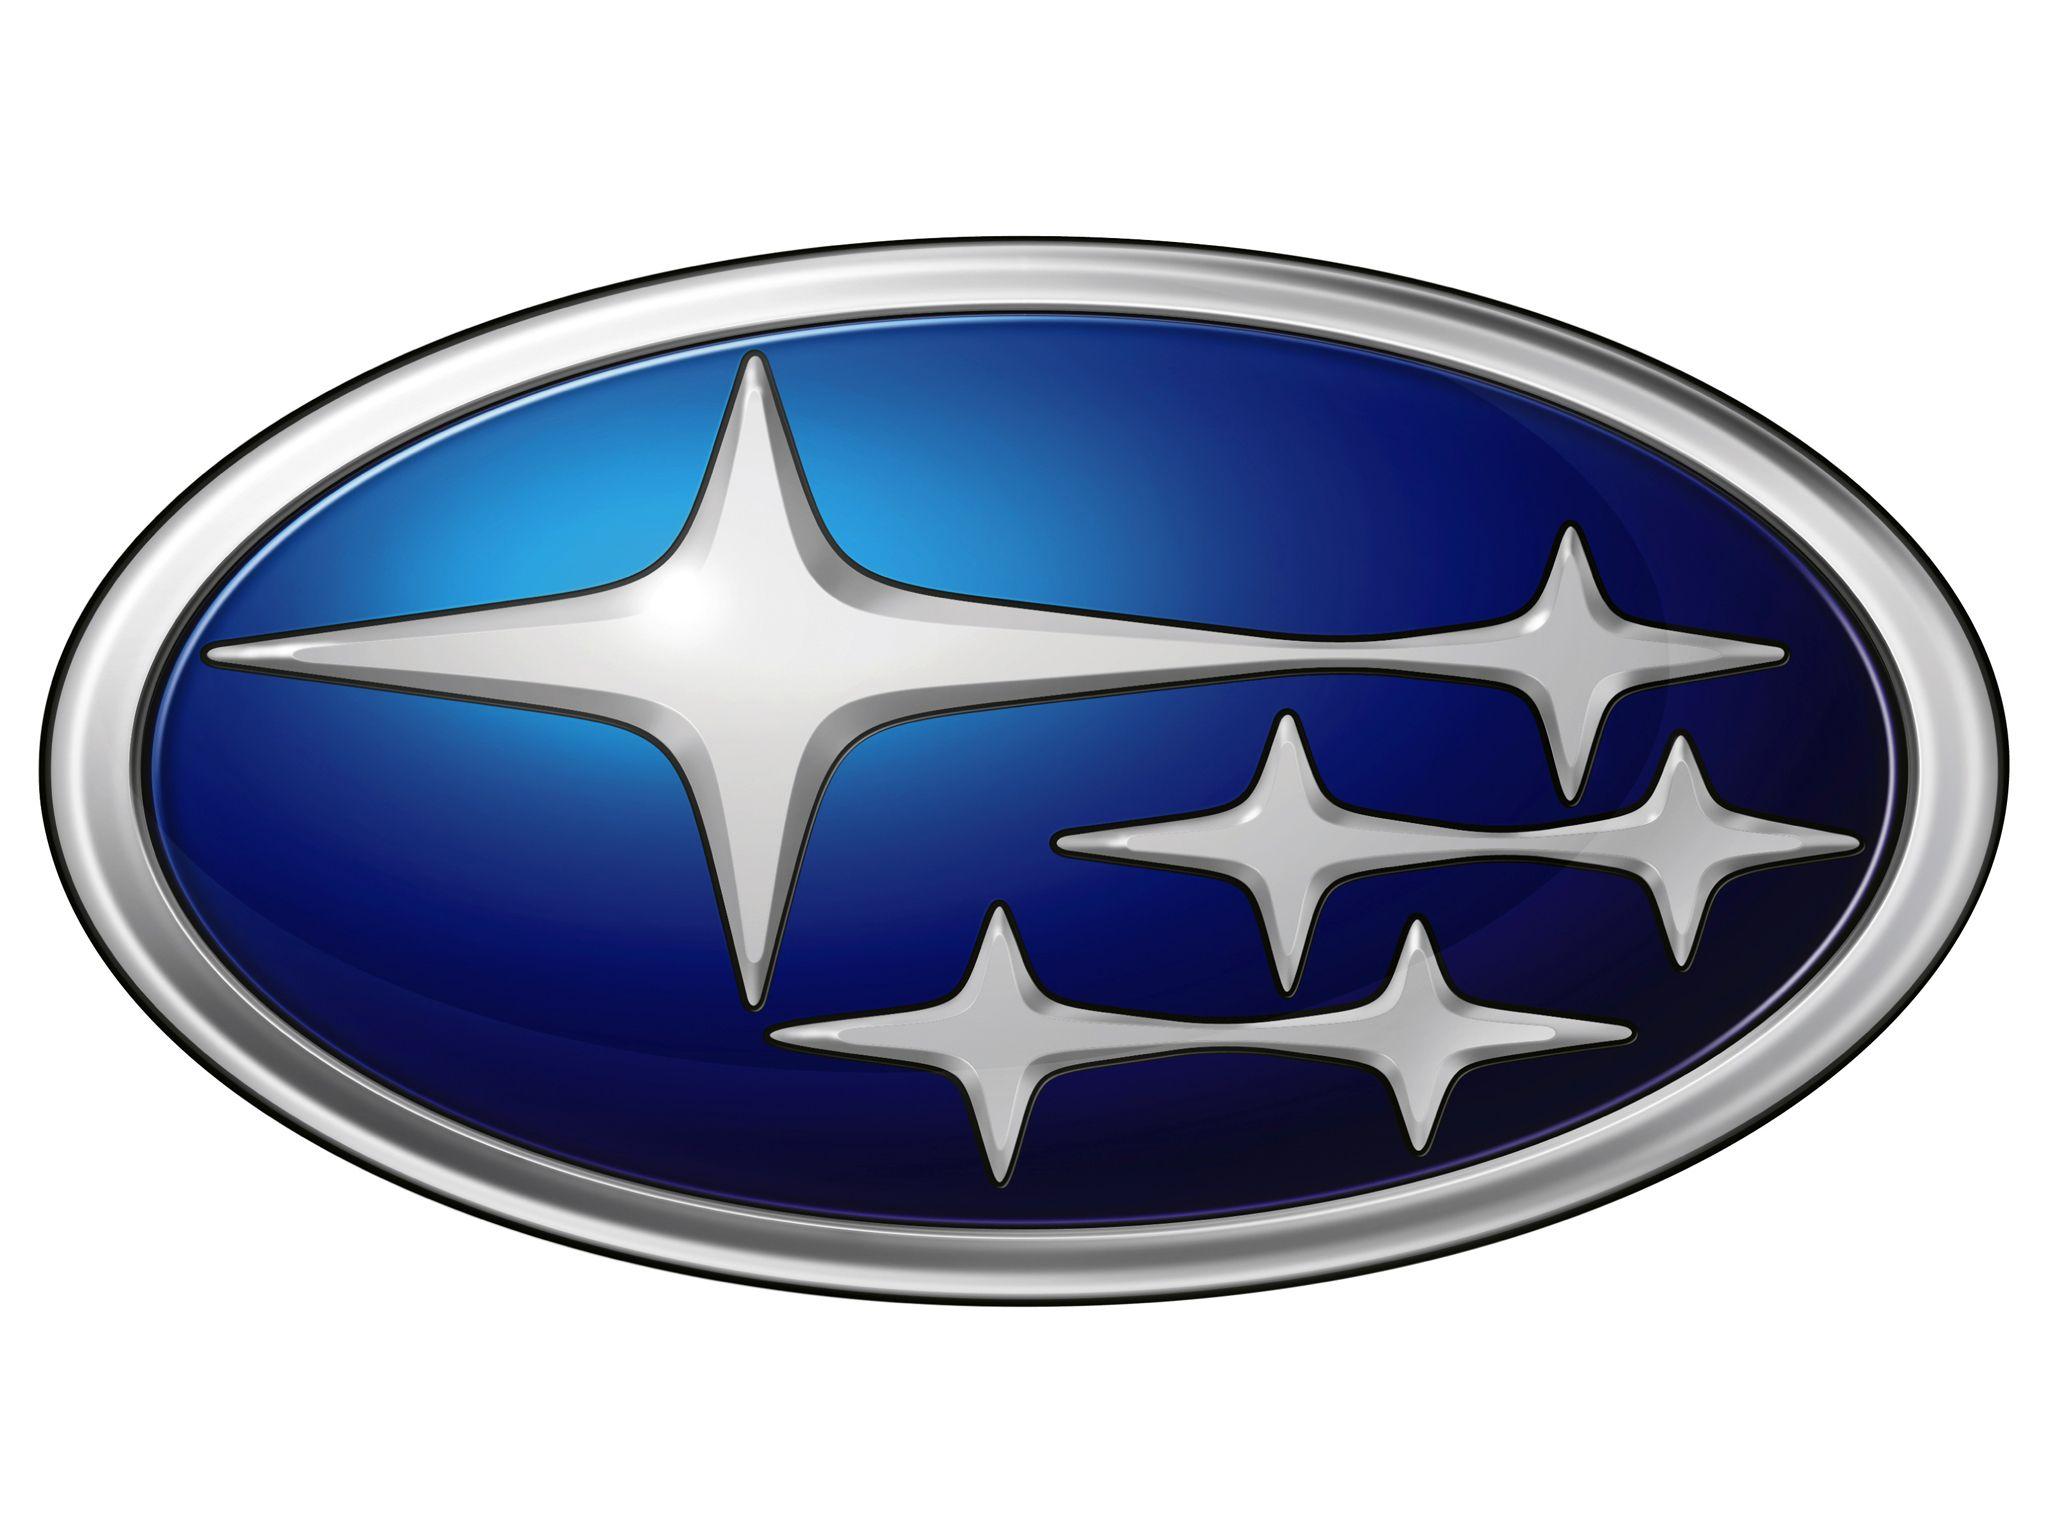 Subaru Logo Wallpaper